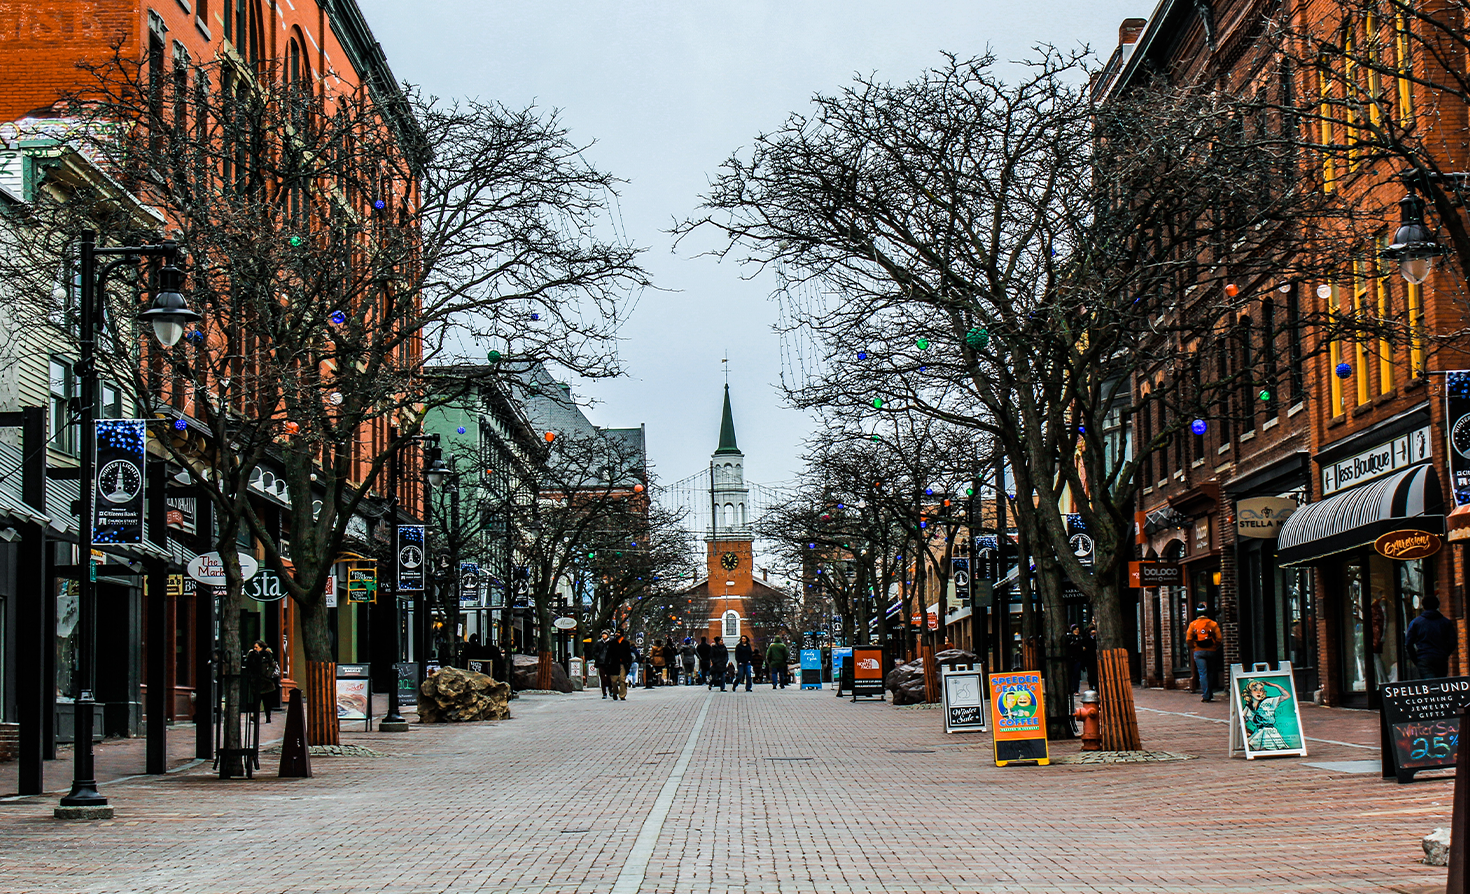 Church Street in Burlington, Vermont. Image via Shutterstock/Louisen.